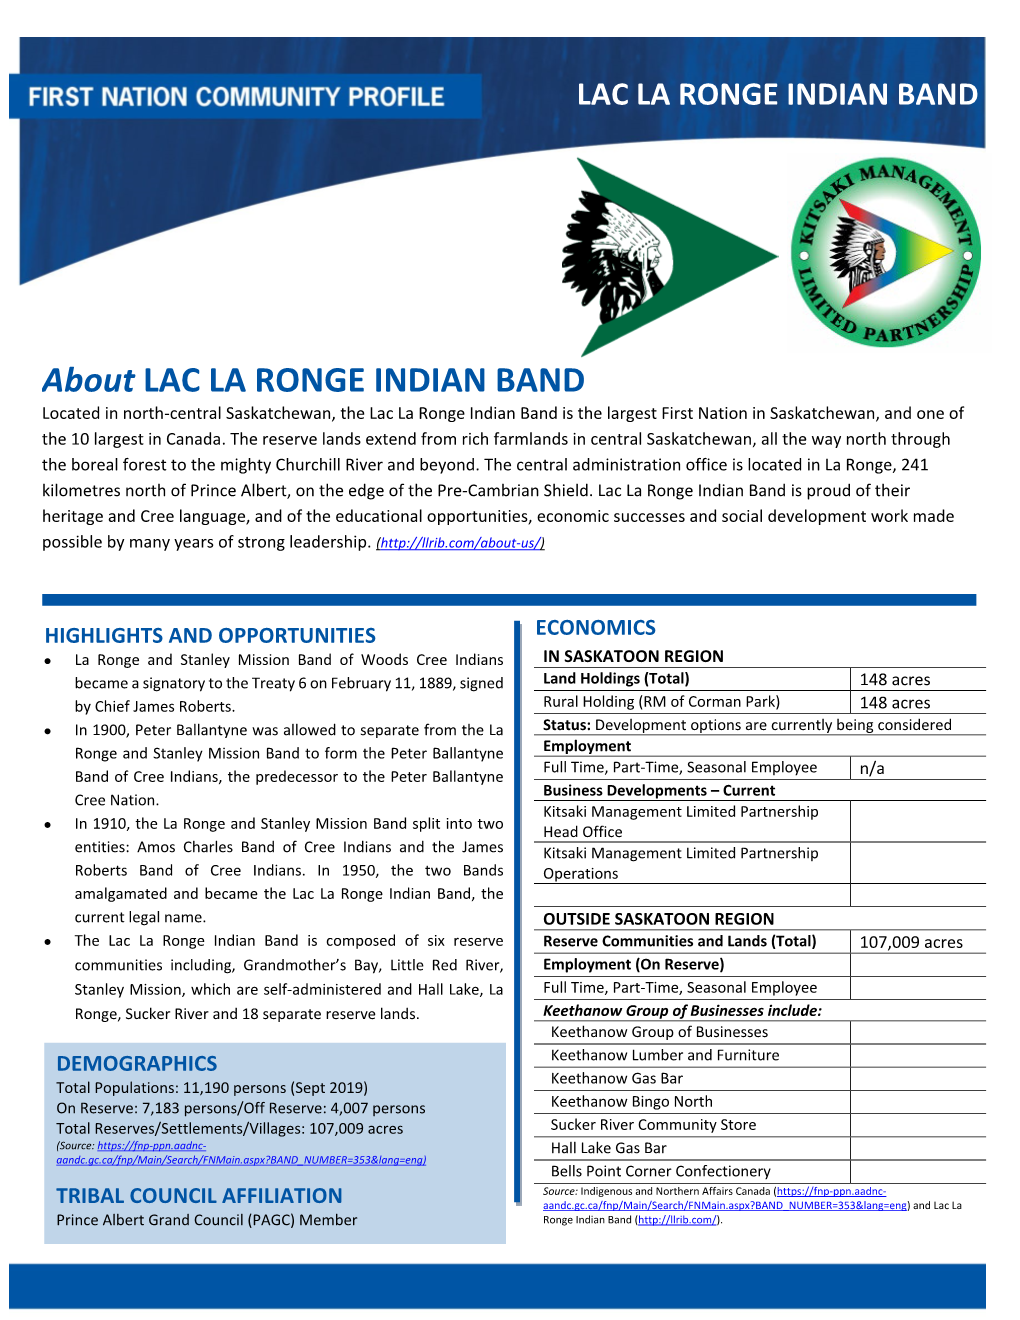 About LAC LA RONGE INDIAN BAND